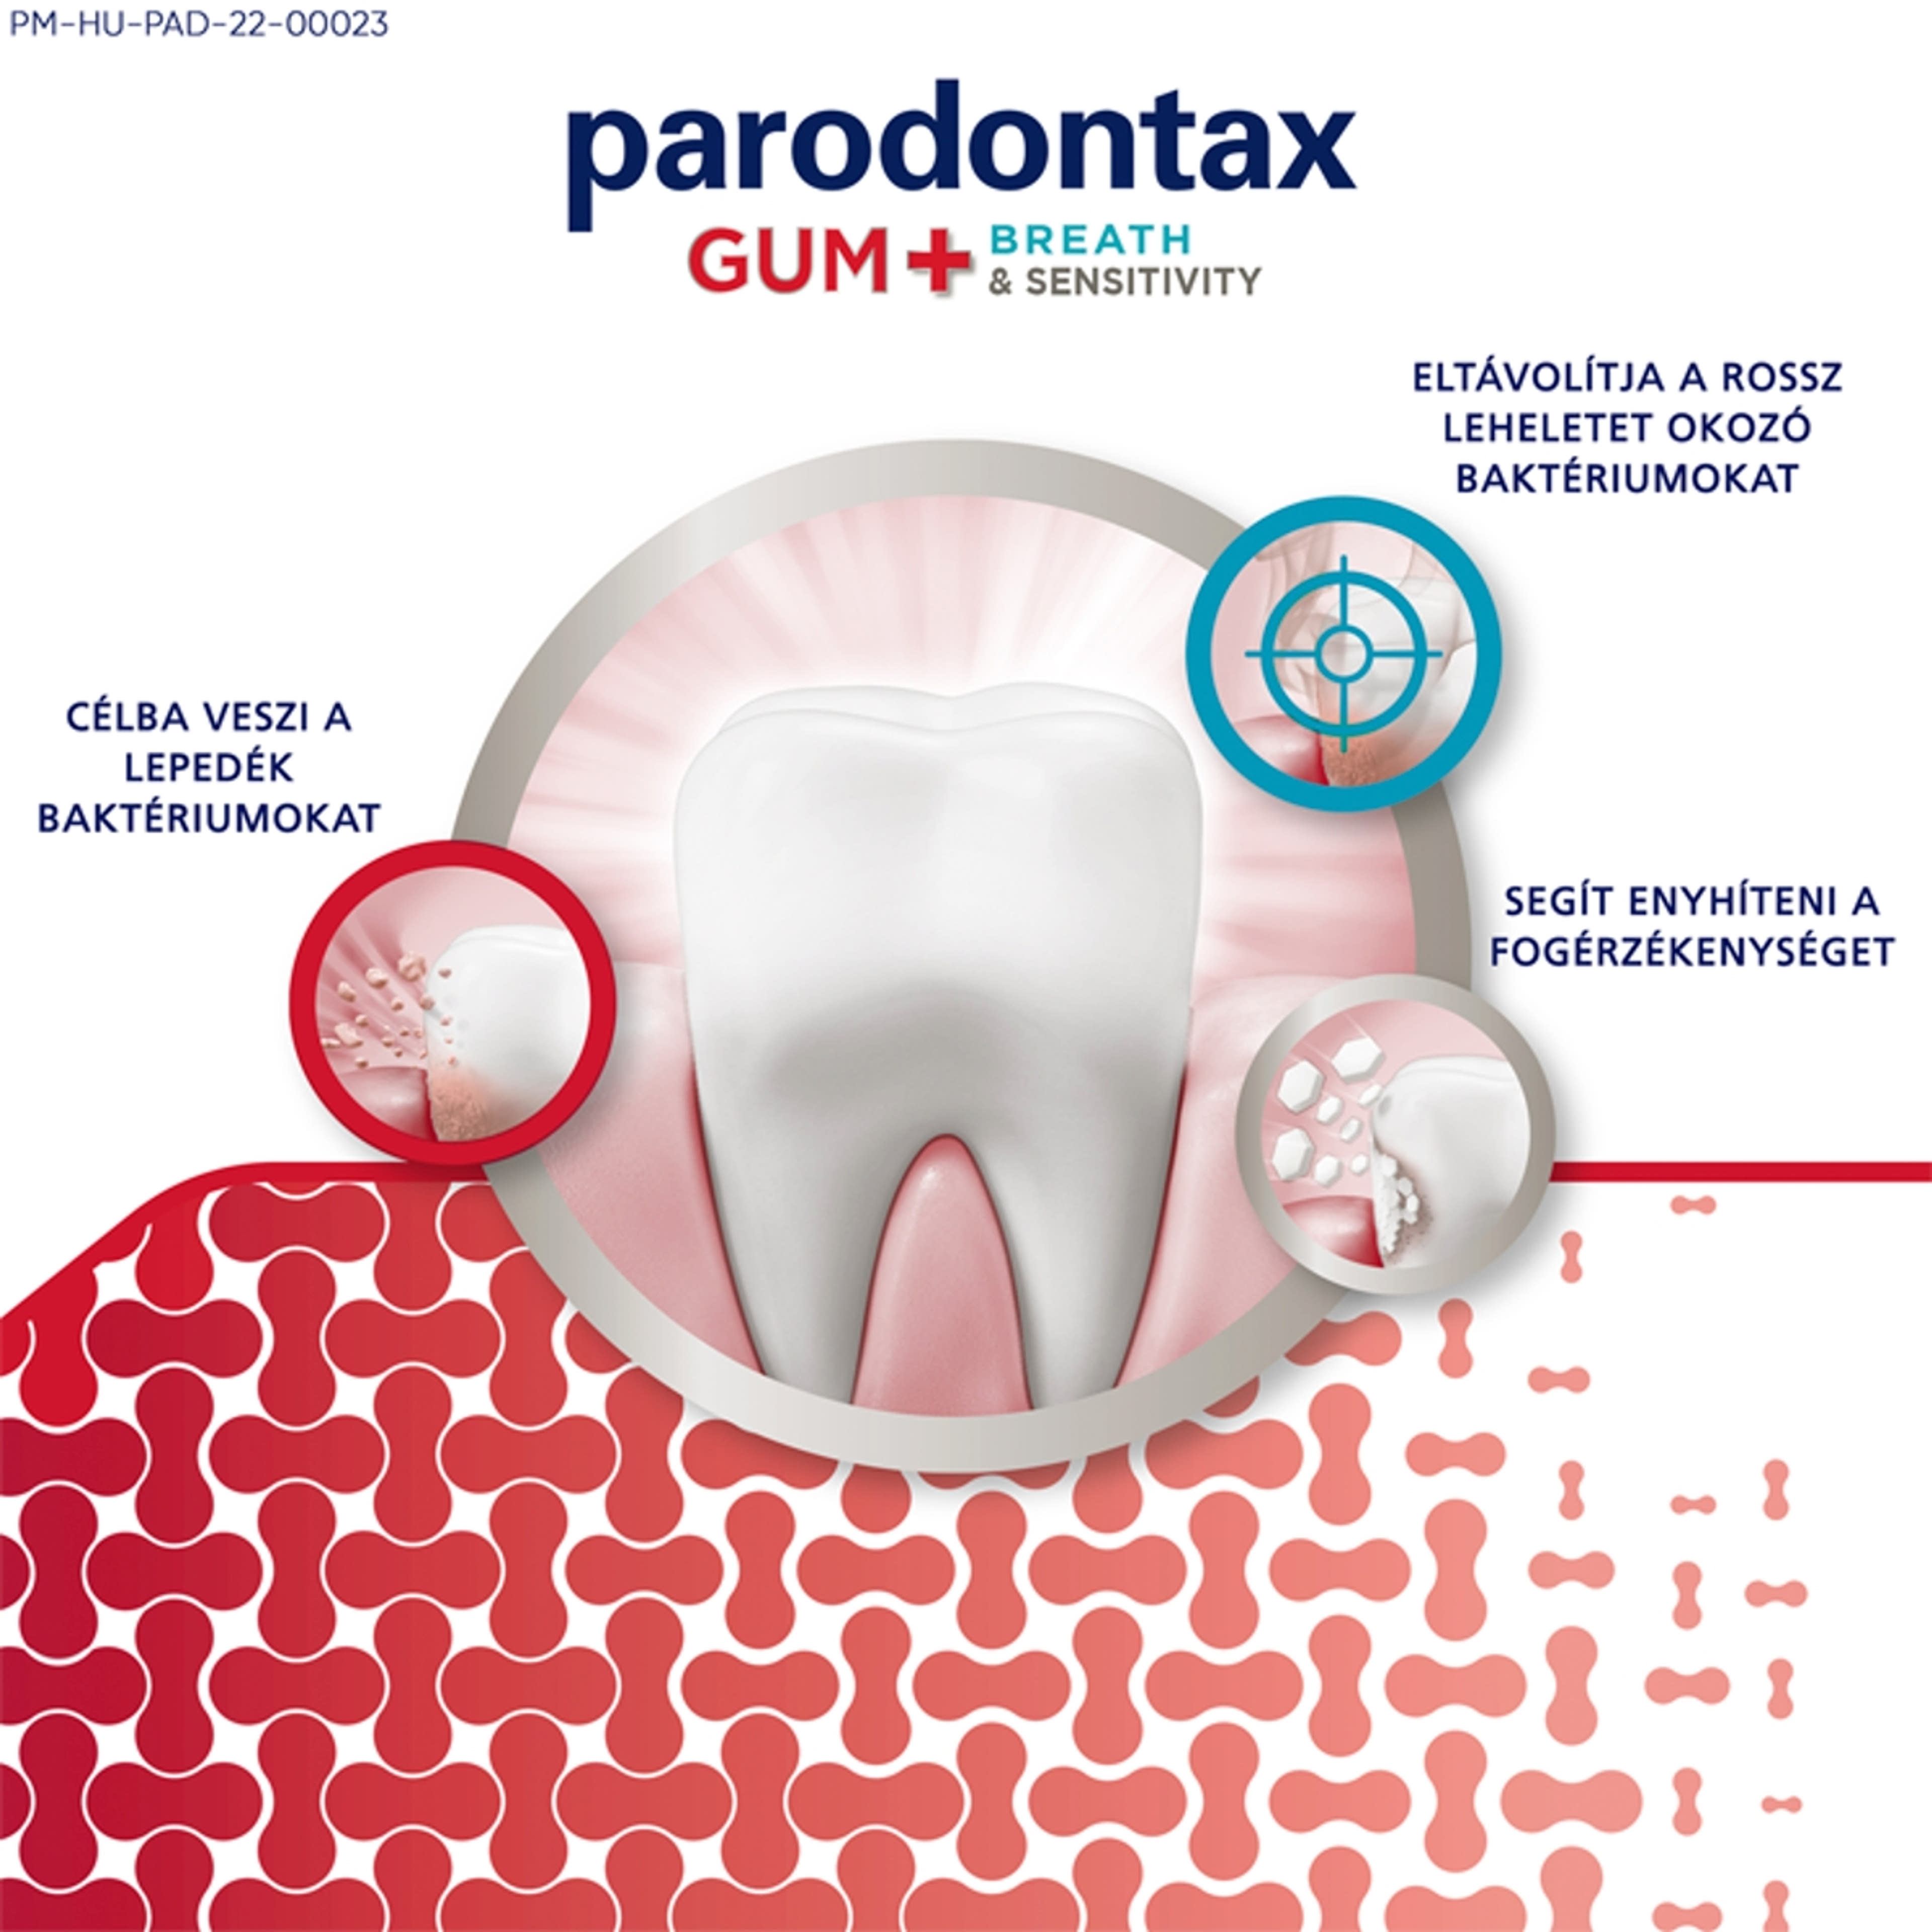 Parodontax Gum + Breath & Sensitivity fluoridos fogkrém - 75 ml-6